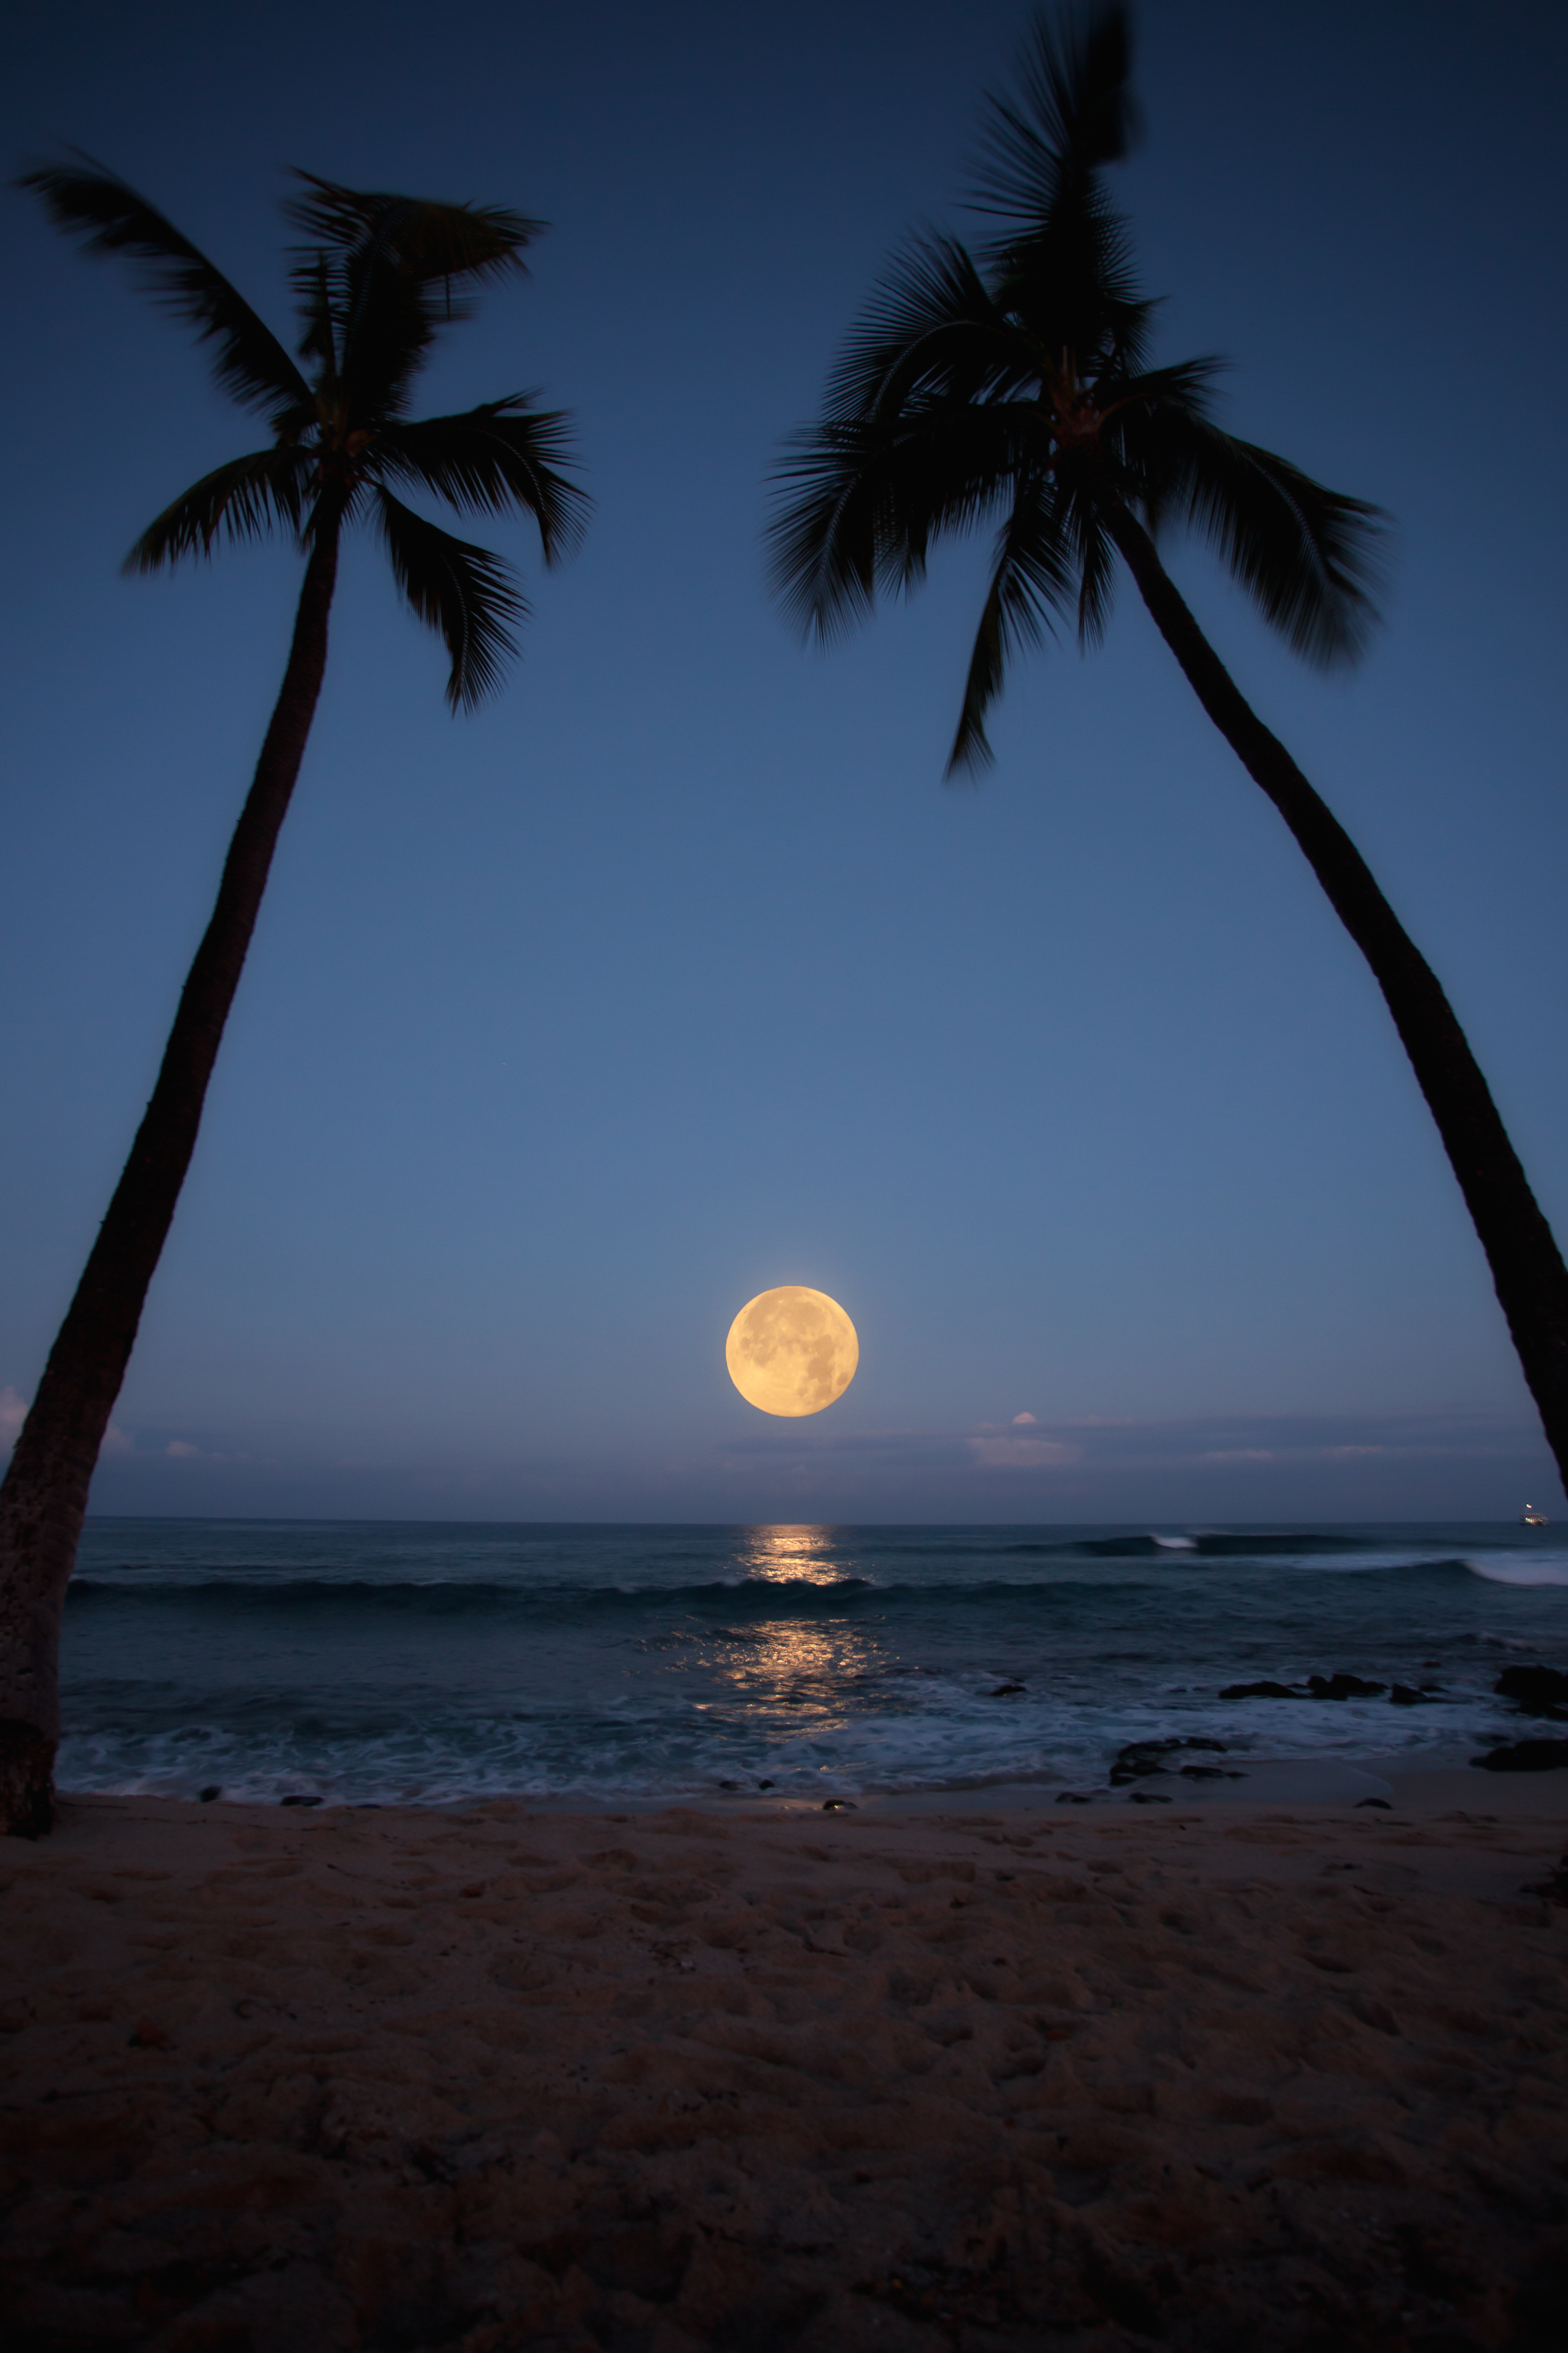 http://www.hawaiireporter.com/wp-content/uploads/2012/05/super-full-moon-over-hawaii.jpg